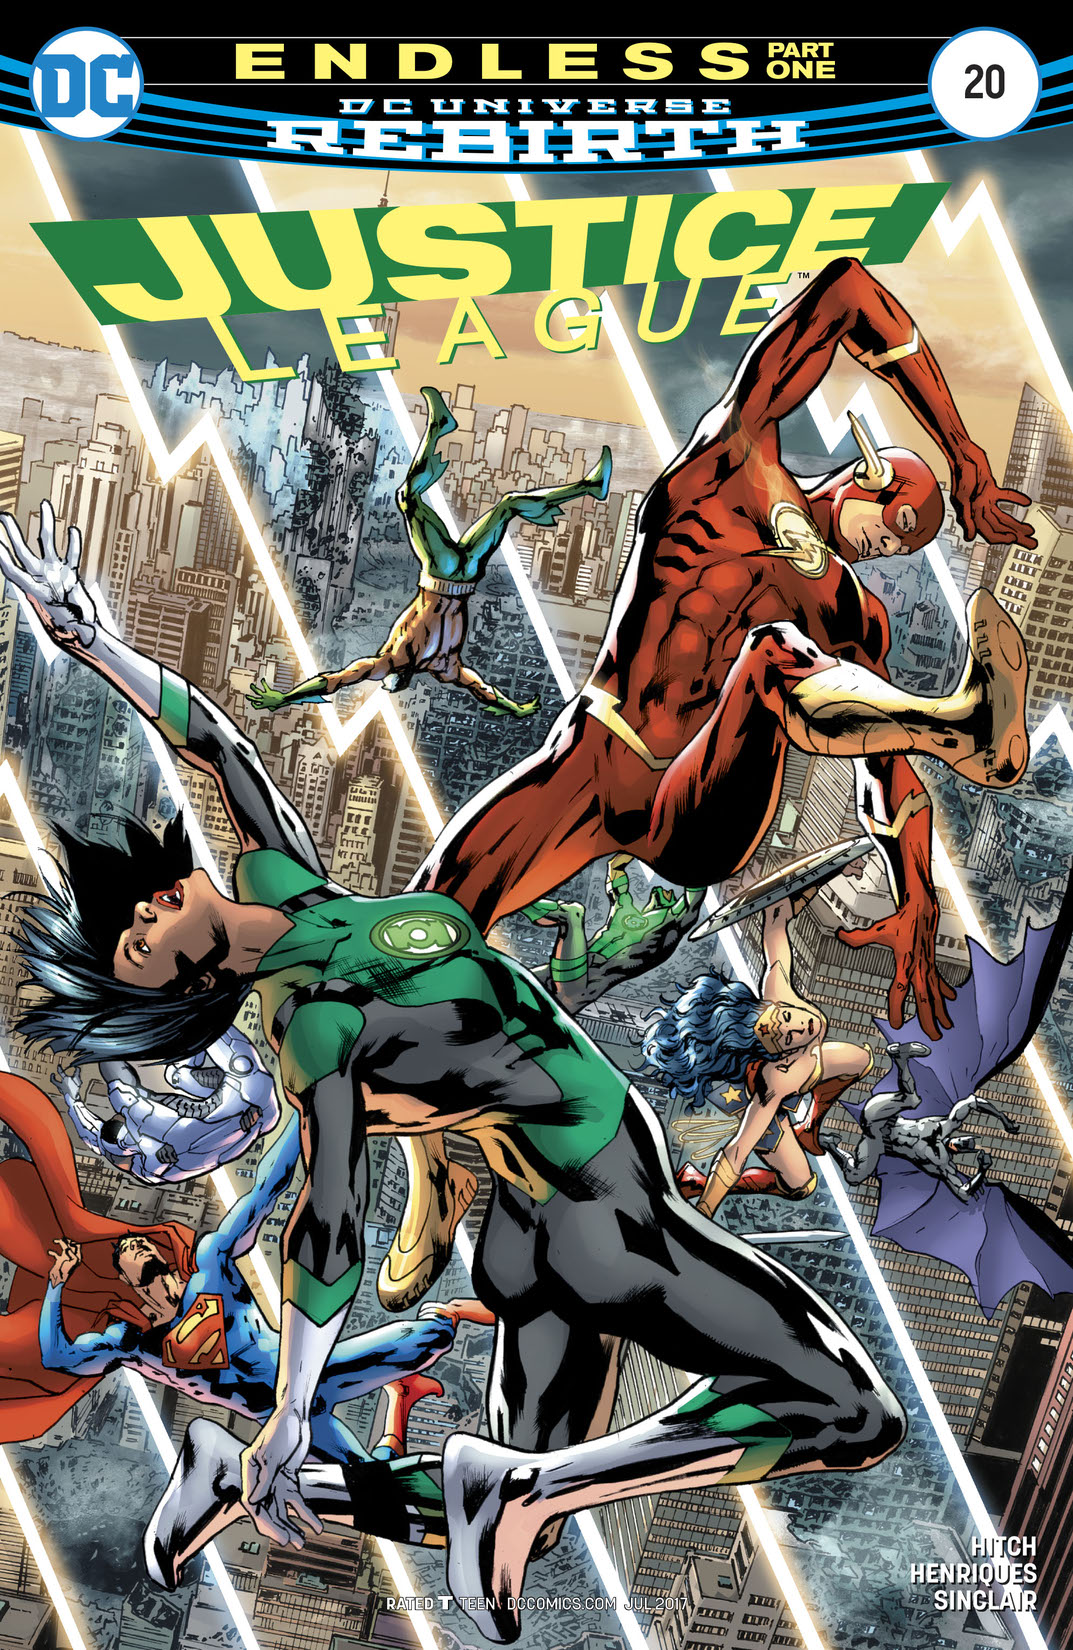 Justice League (2016-) #20 preview images